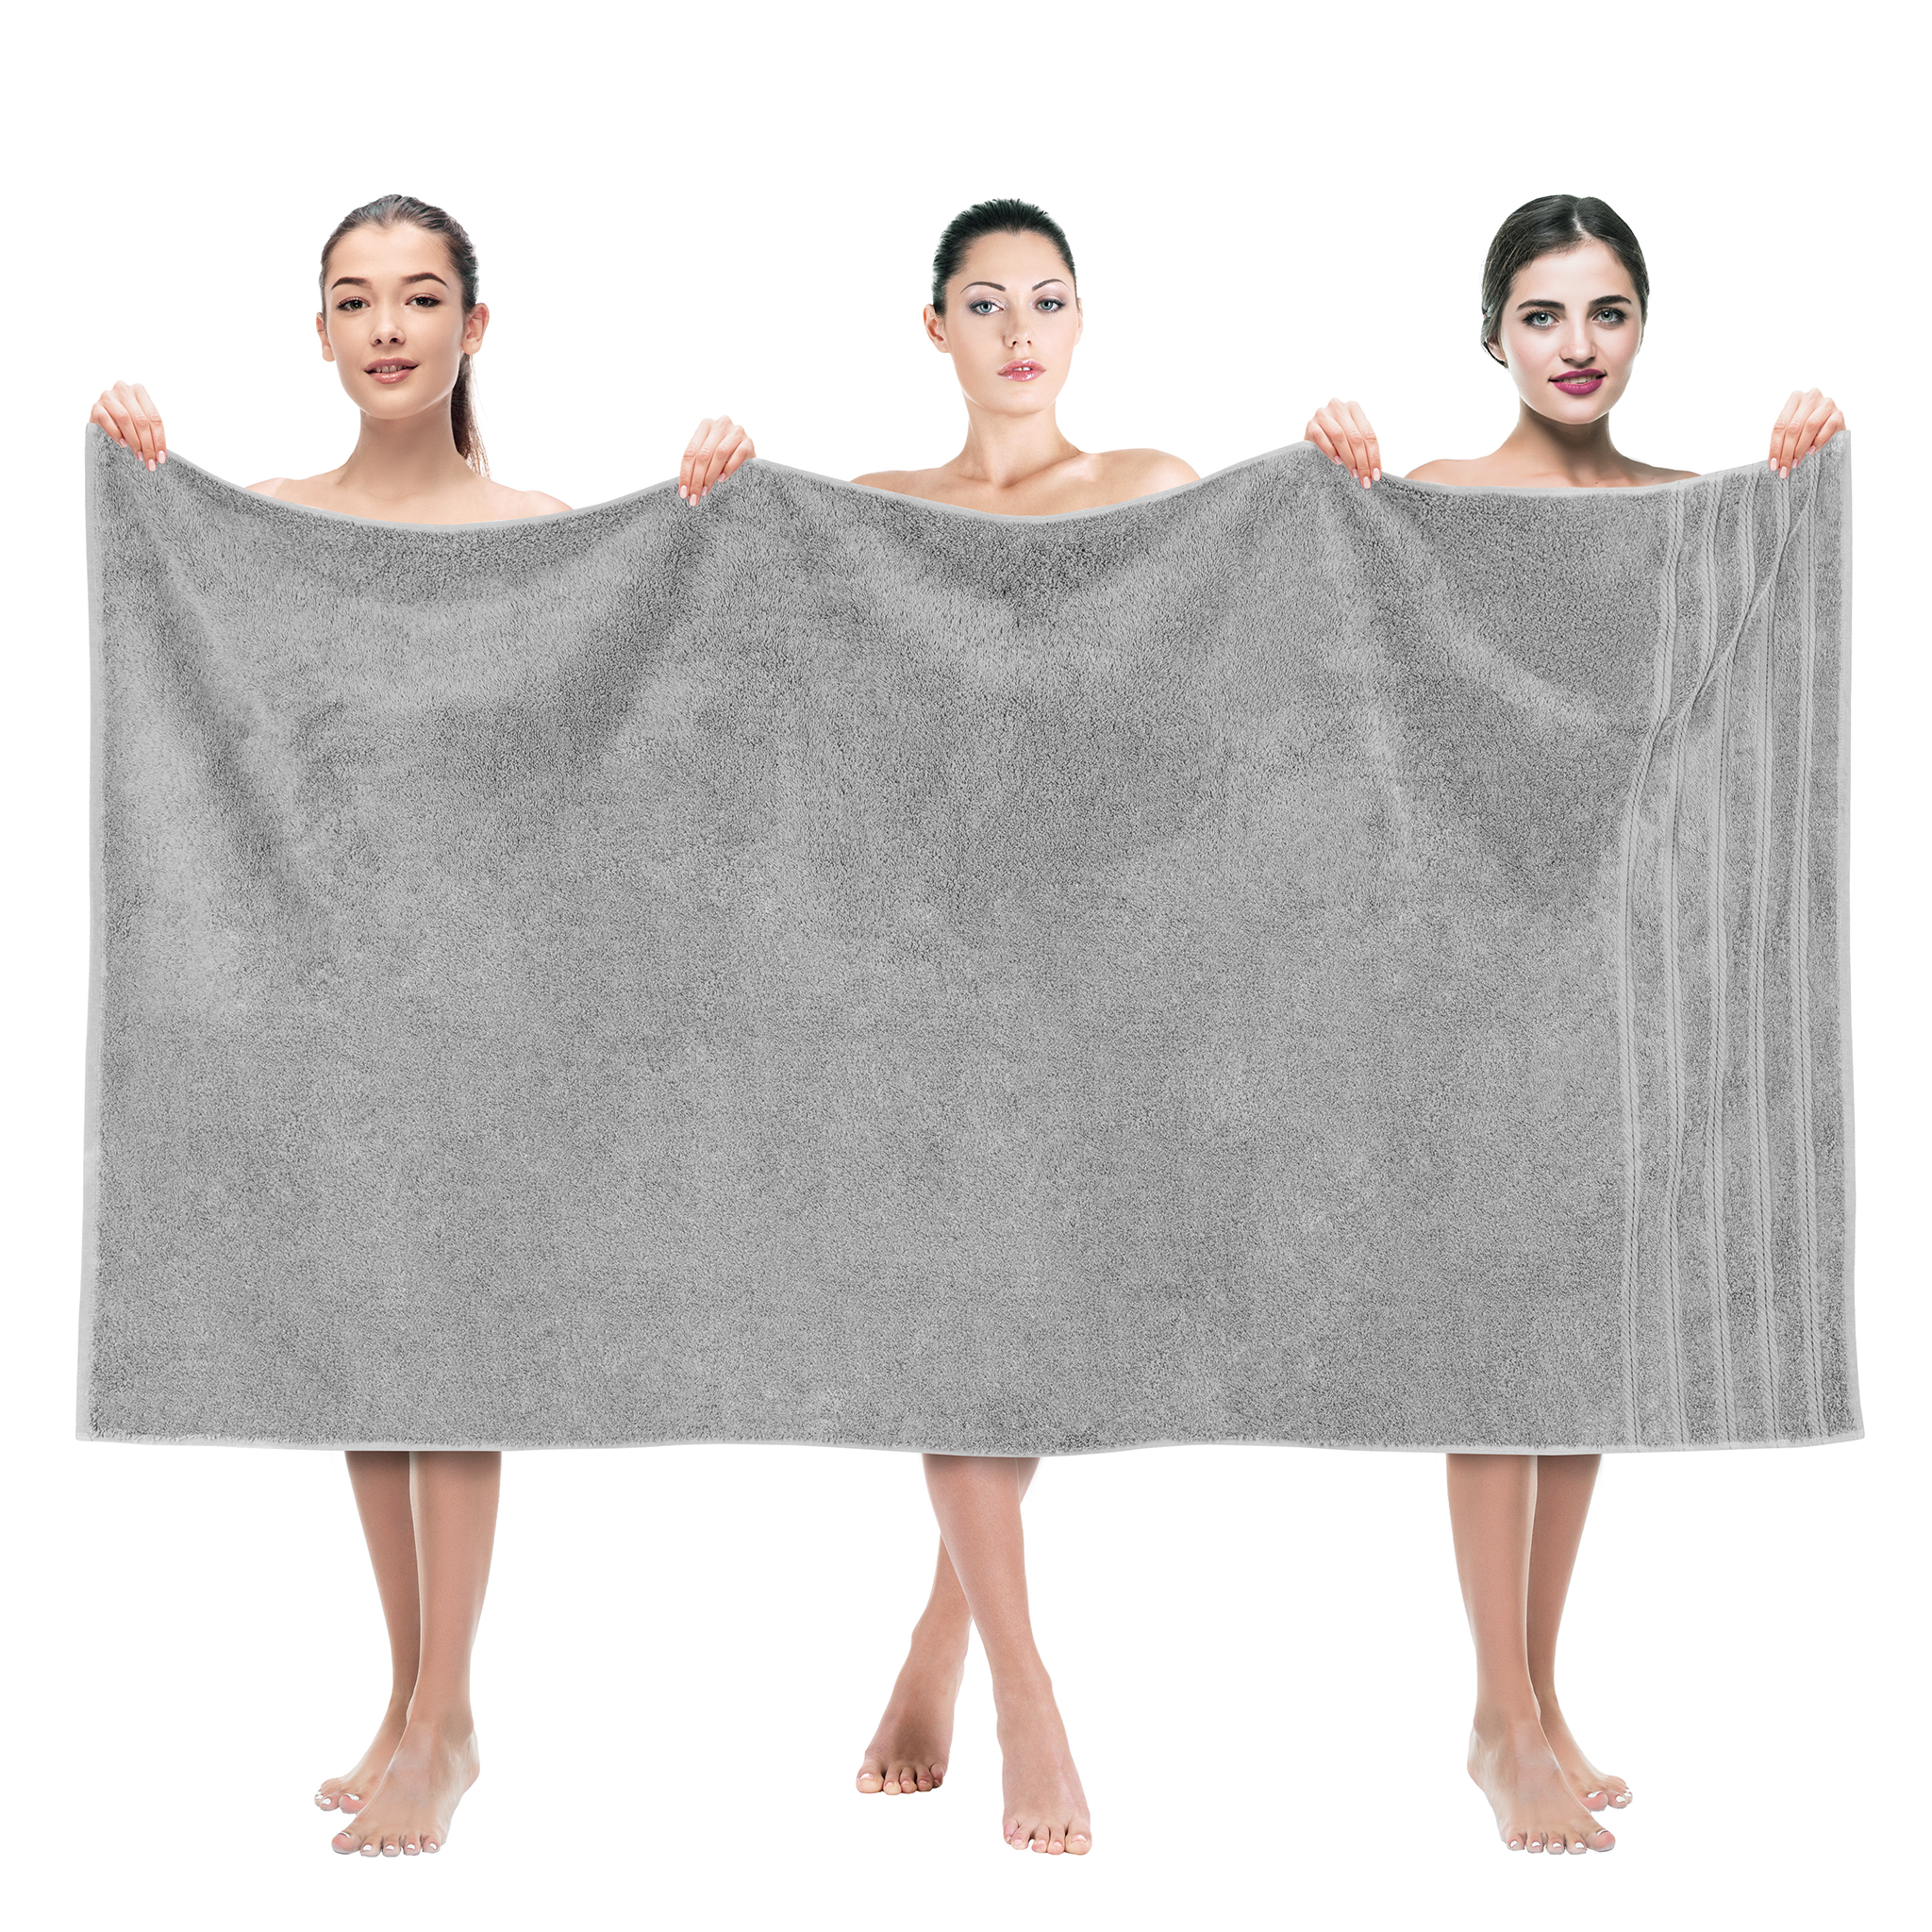 American Soft Linen - 35x70 Jumbo Bath Sheet Turkish Bath Towel - 16 Piece Case Pack - Rockridge-Gray - 1